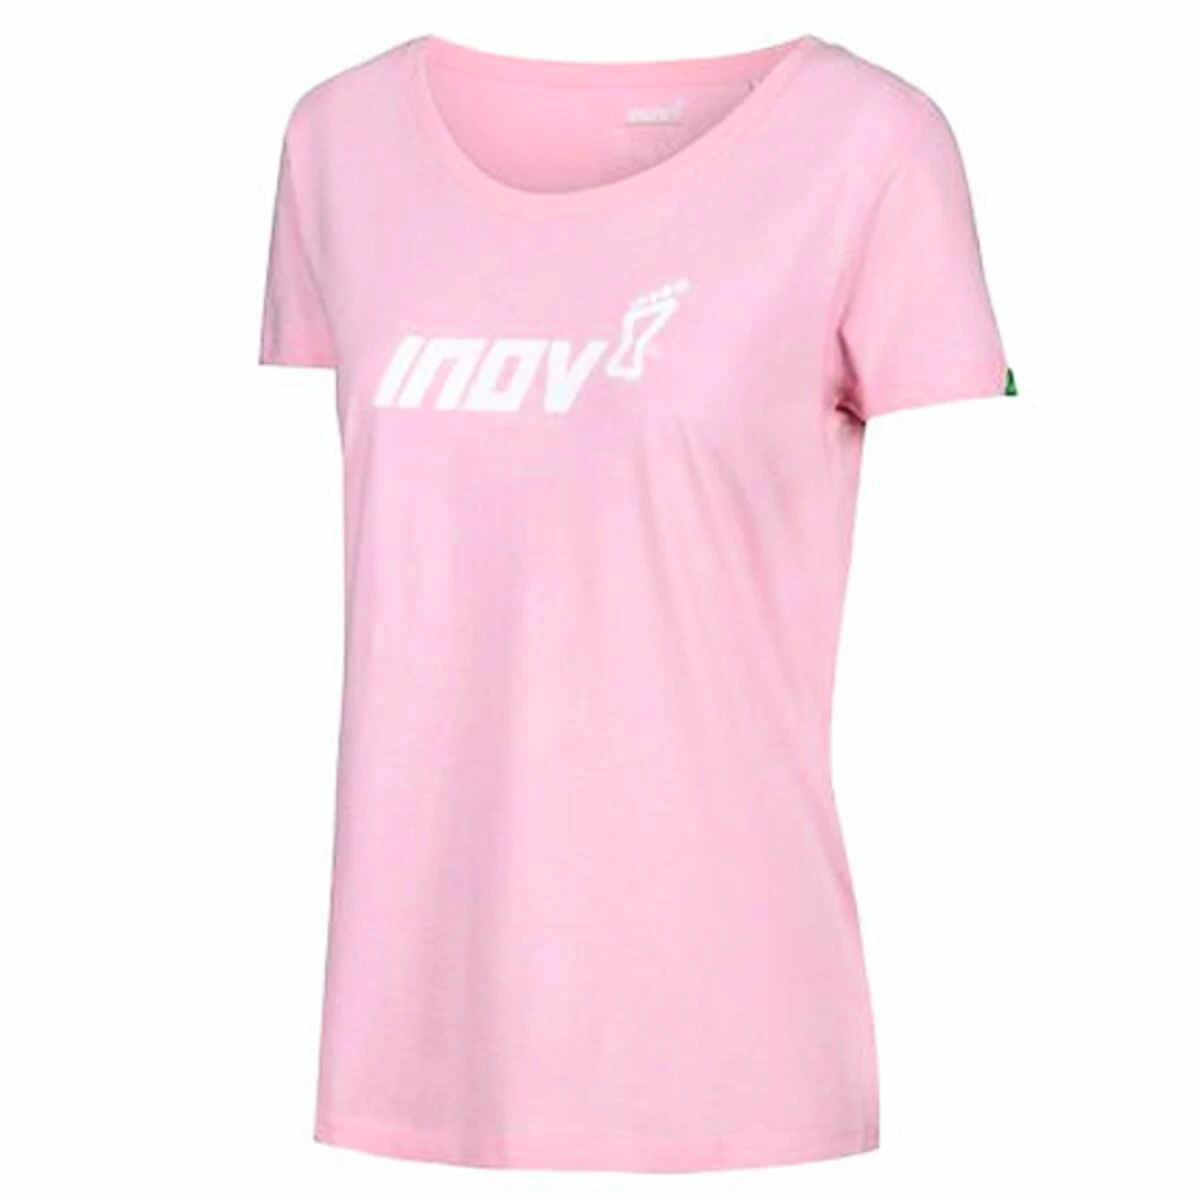 Women's T-shirt Inov-8 Cotton Tee "Inov-8" Pink